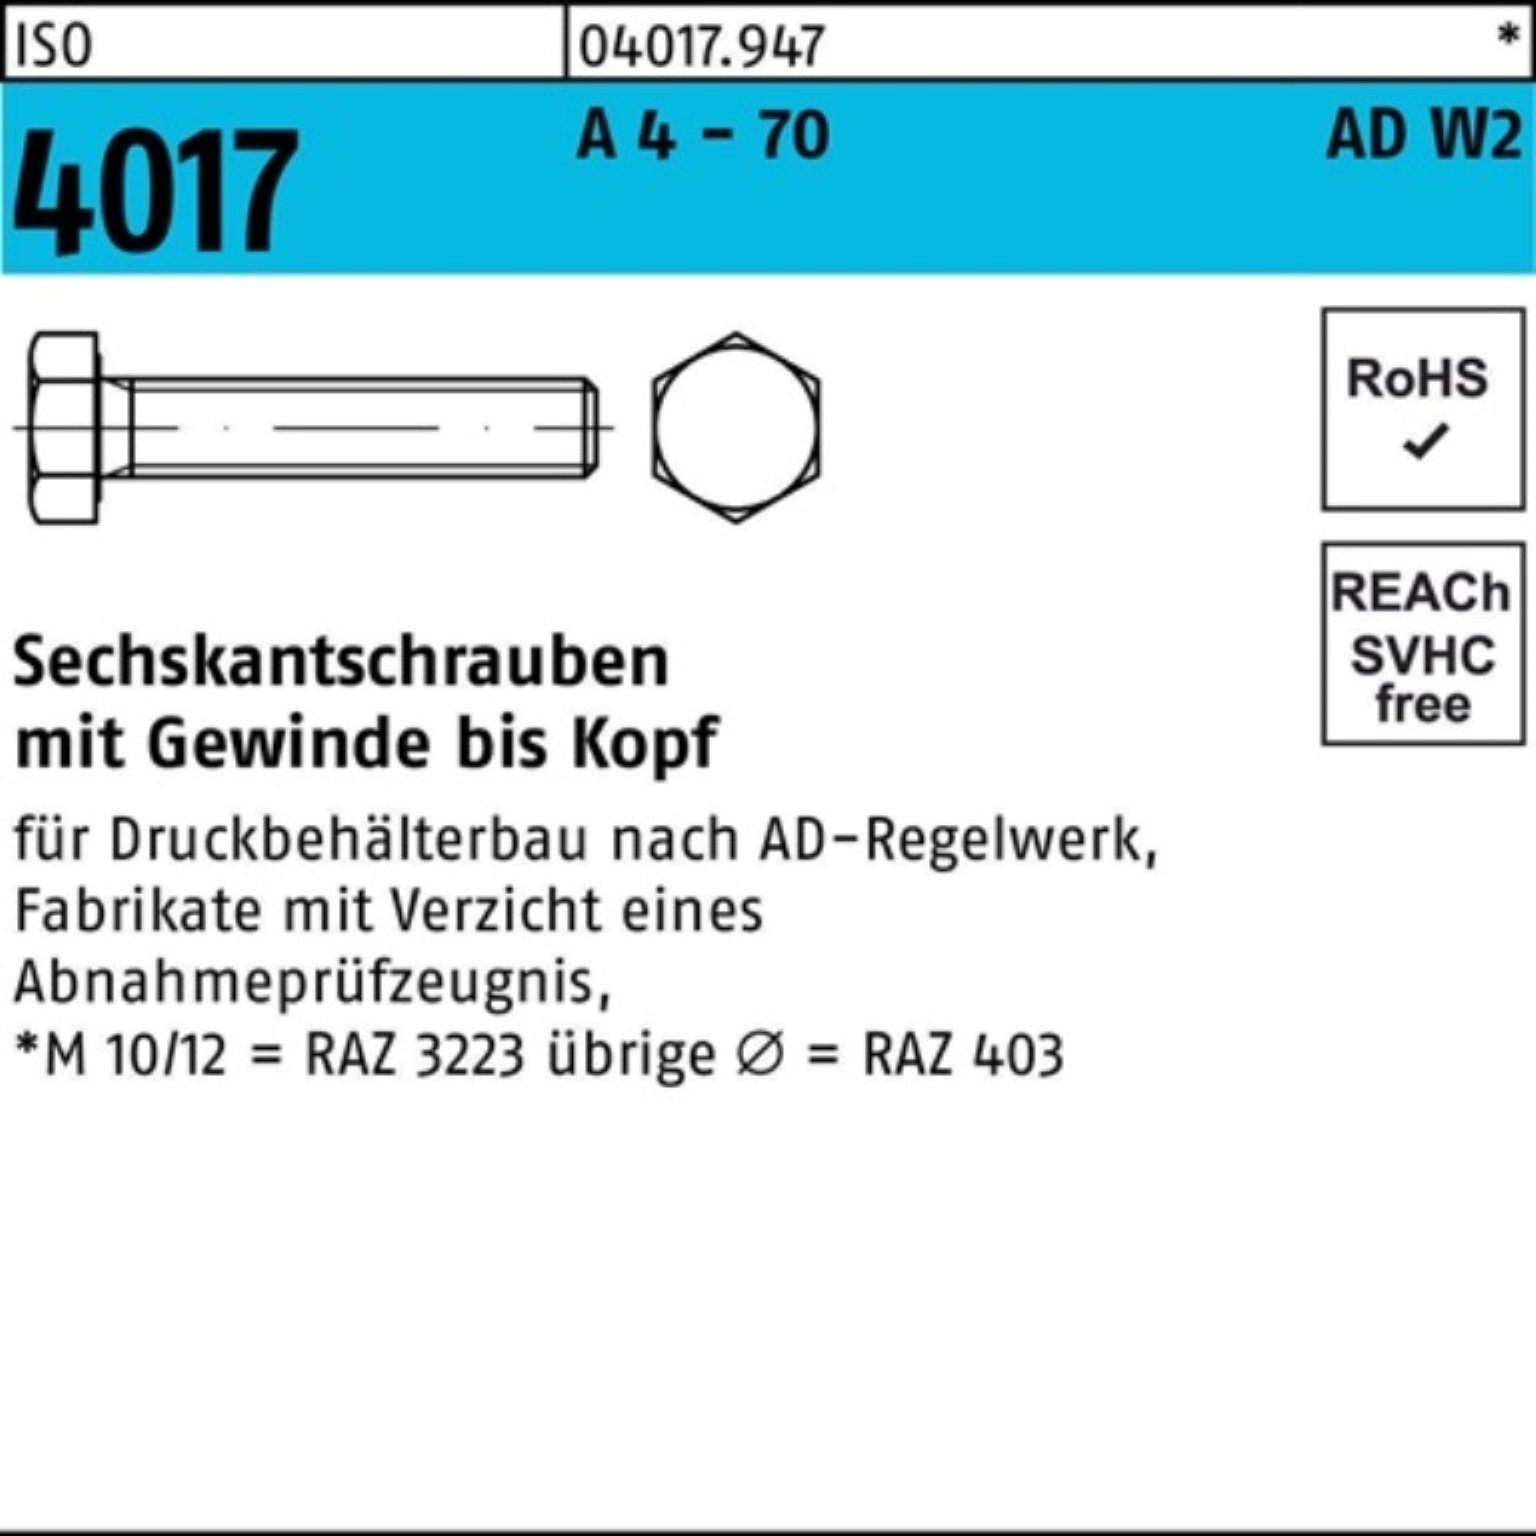 Bufab Sechskantschraube 100er Pack Sechskantschraube ISO 4017 VG M10x 40 A 4 - 70 AD-W2 100 St